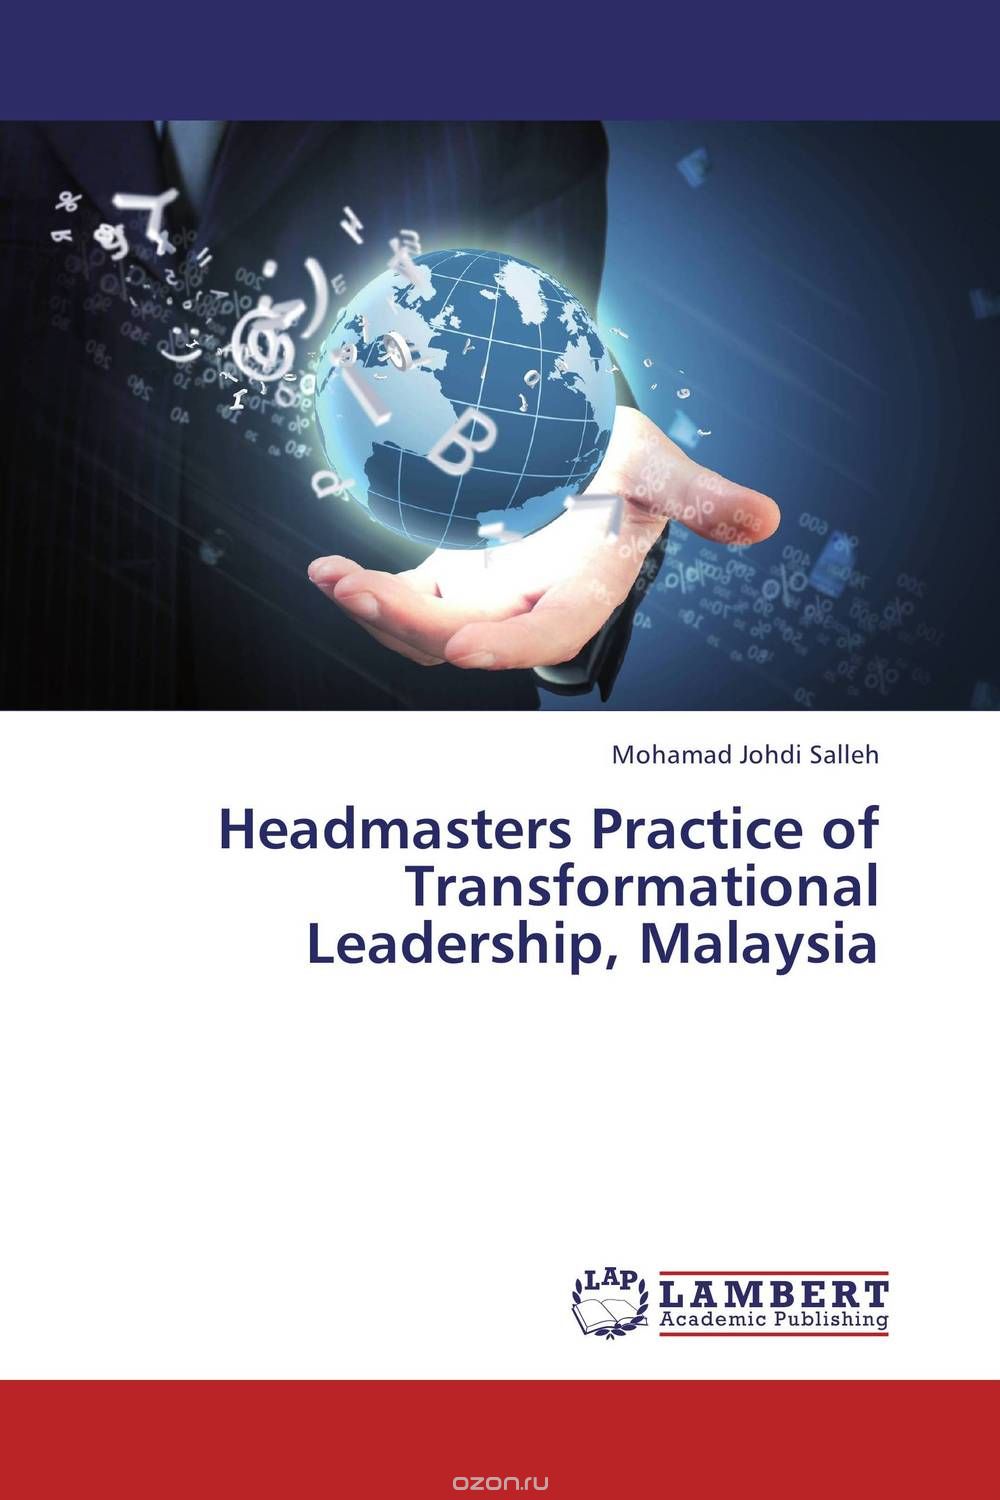 Скачать книгу "Headmasters Practice of Transformational Leadership, Malaysia"